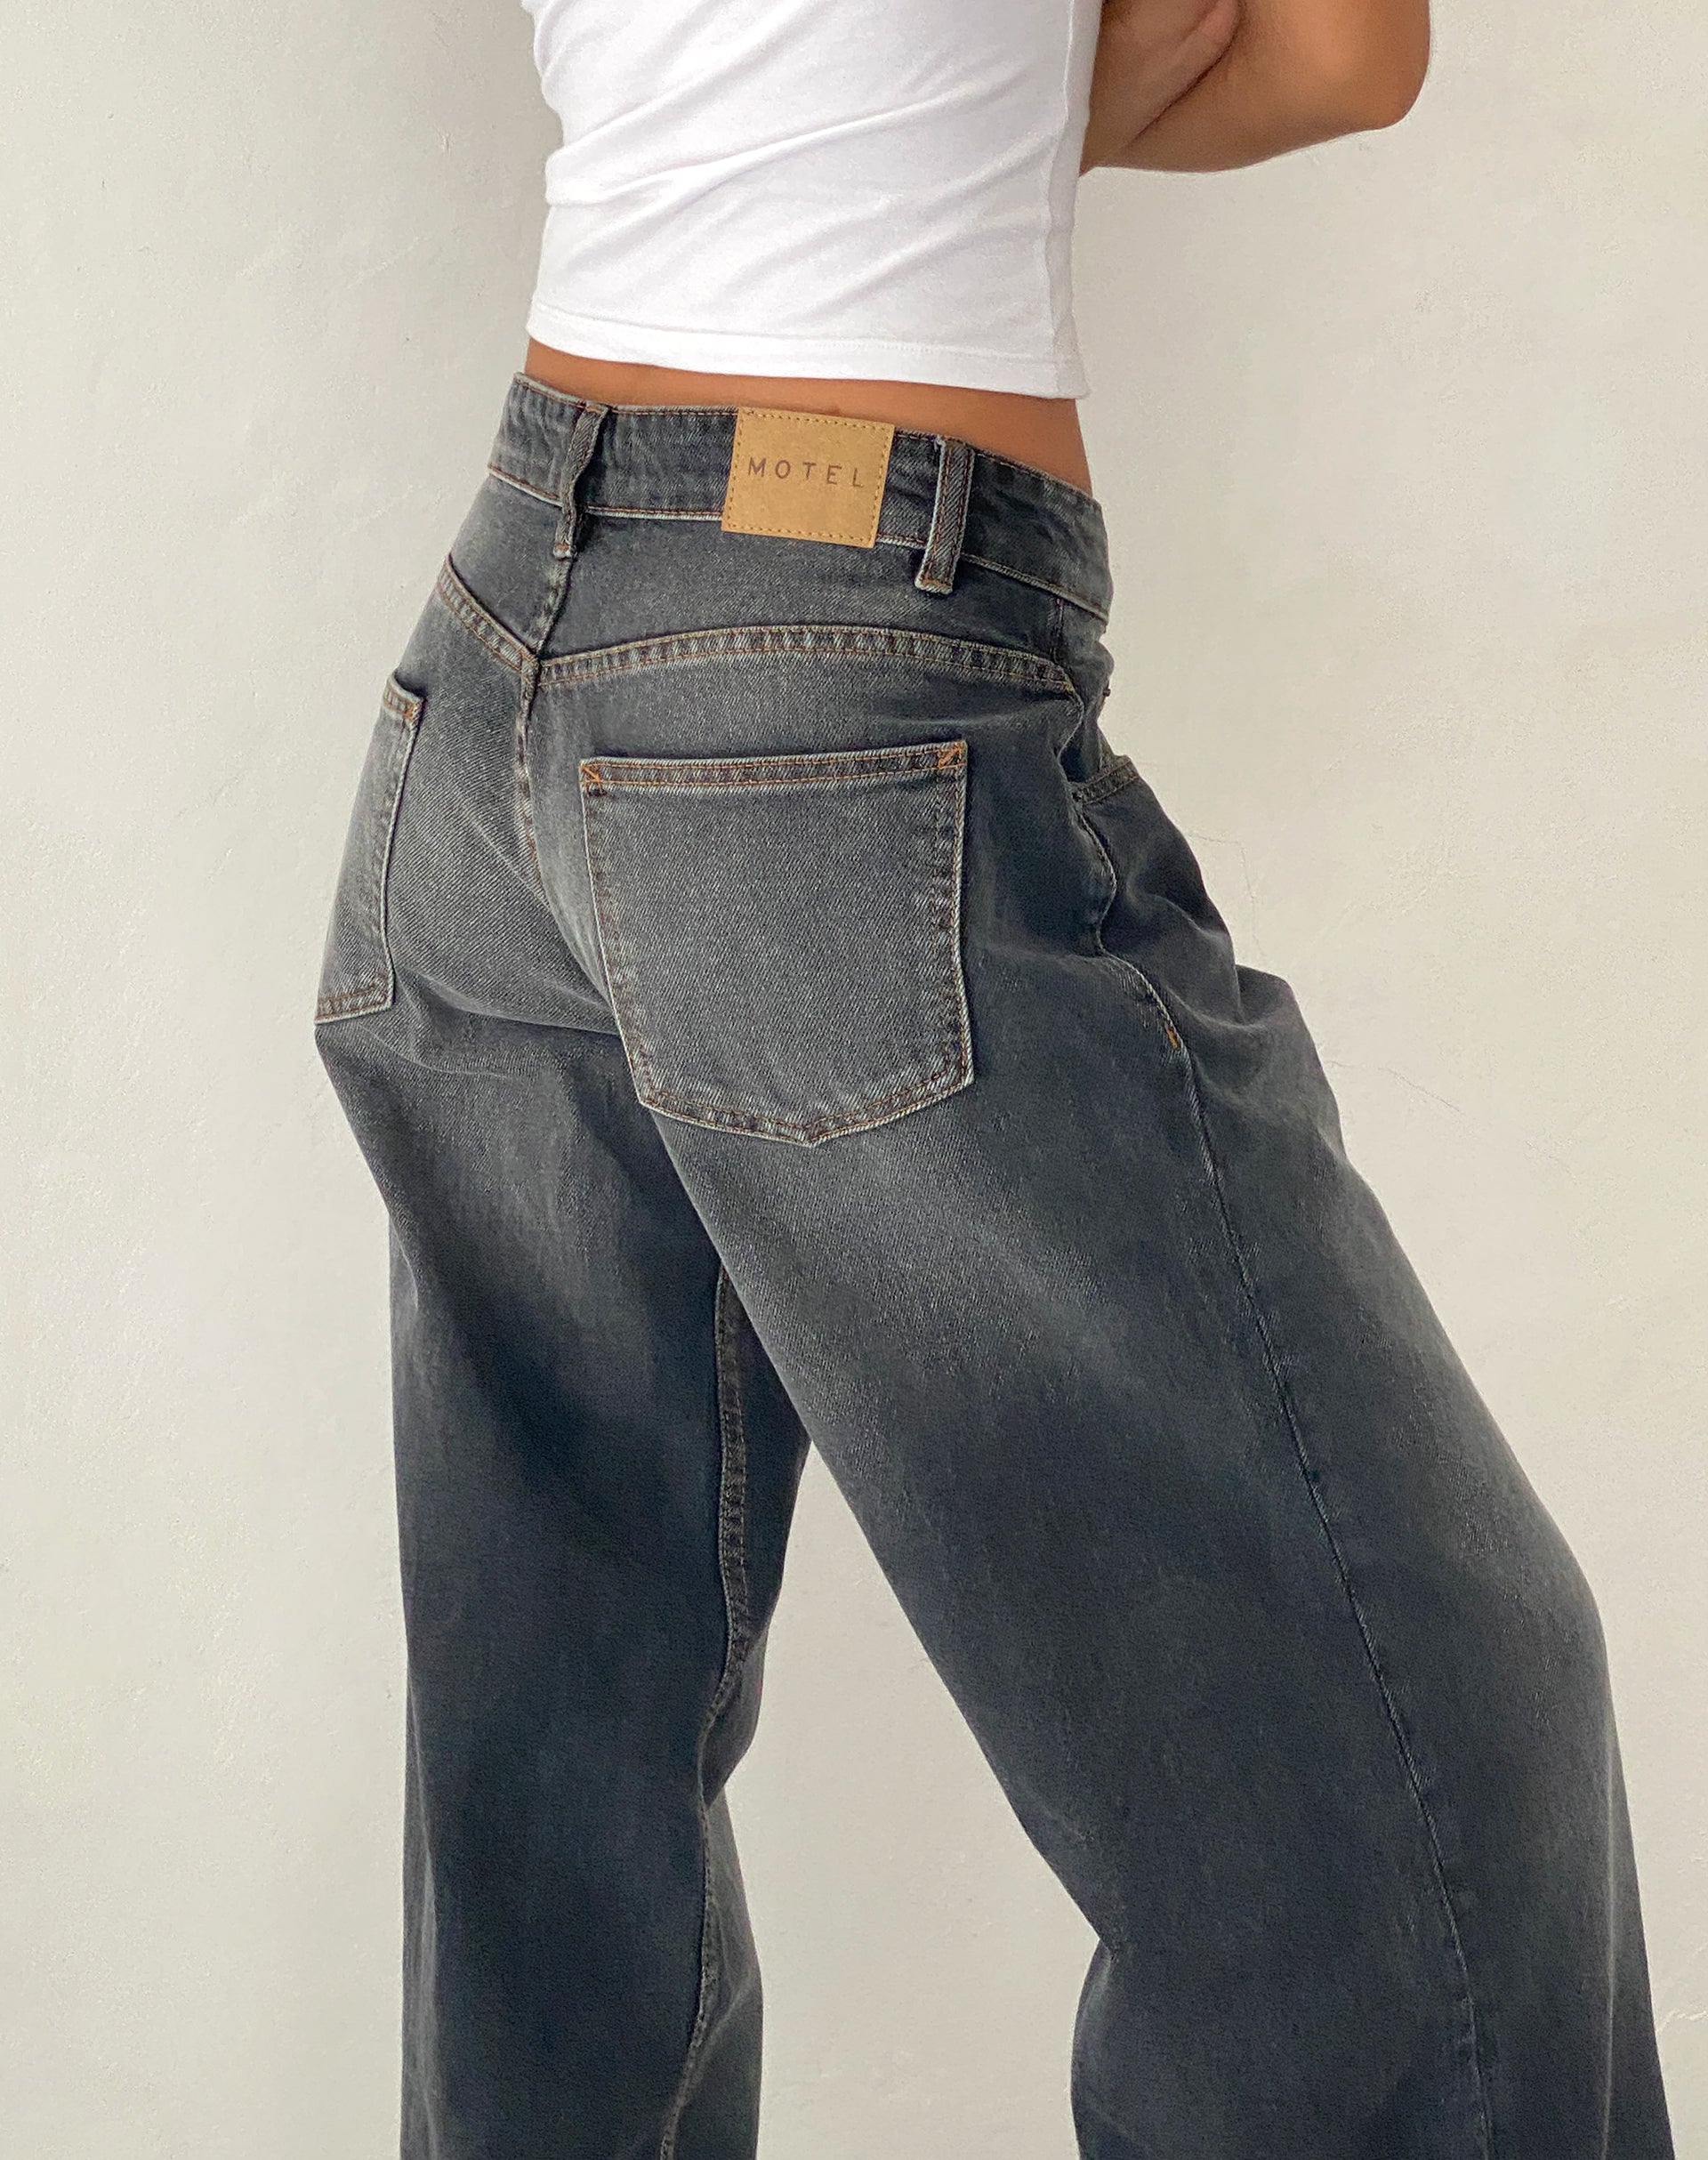 Image de Roomy Extra Wide Low Rise Jeans en Grey Used Bleach